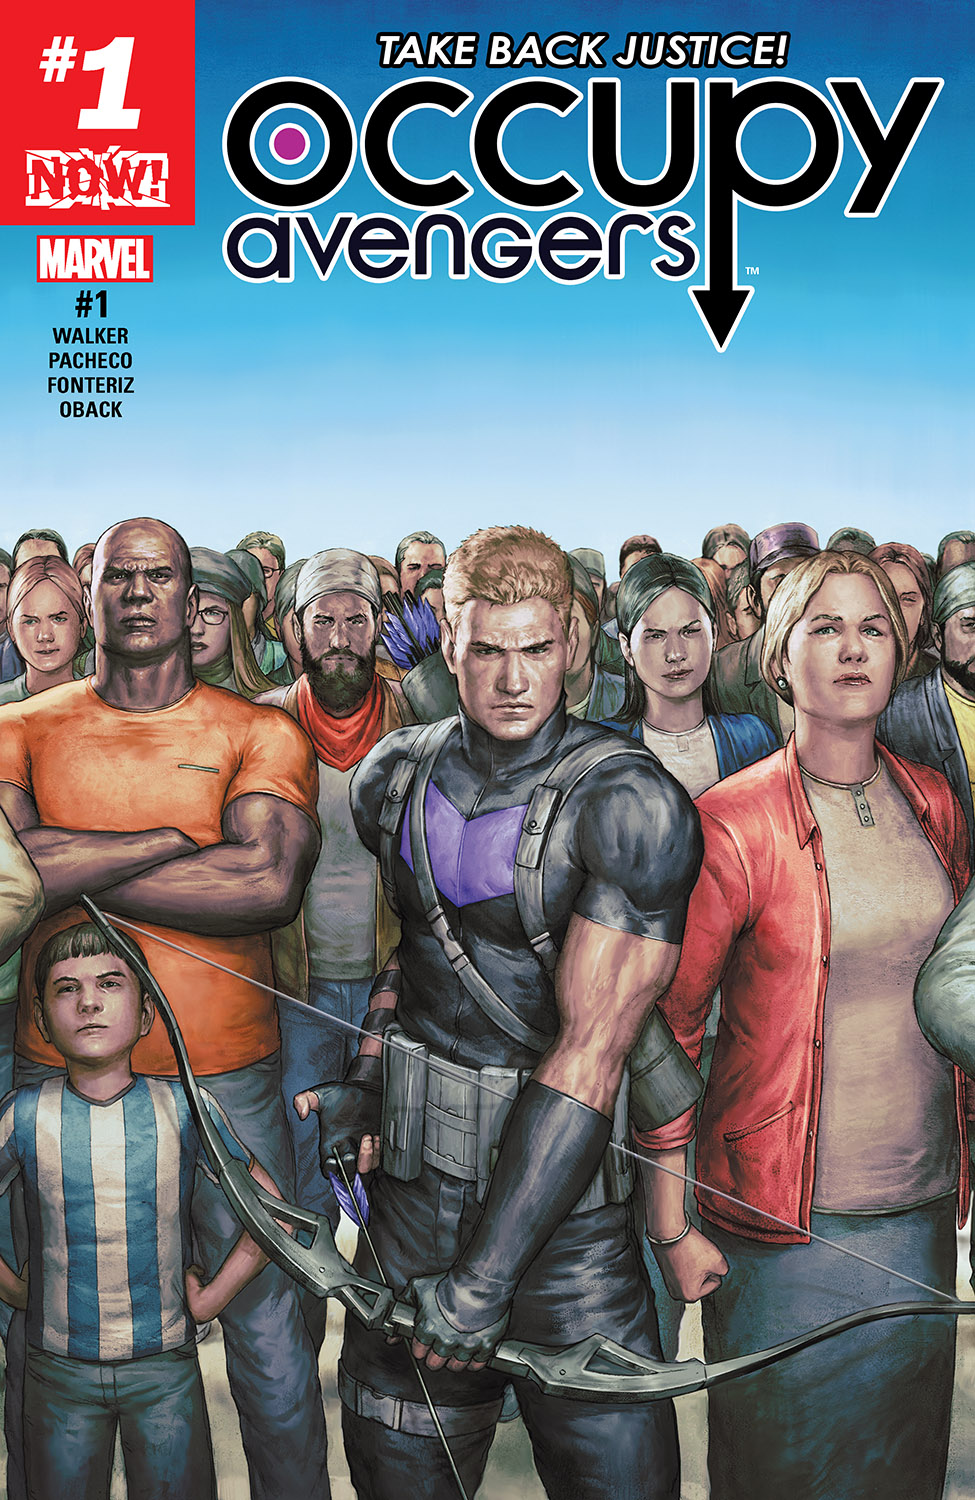 Occupy Avengers (2016) #1